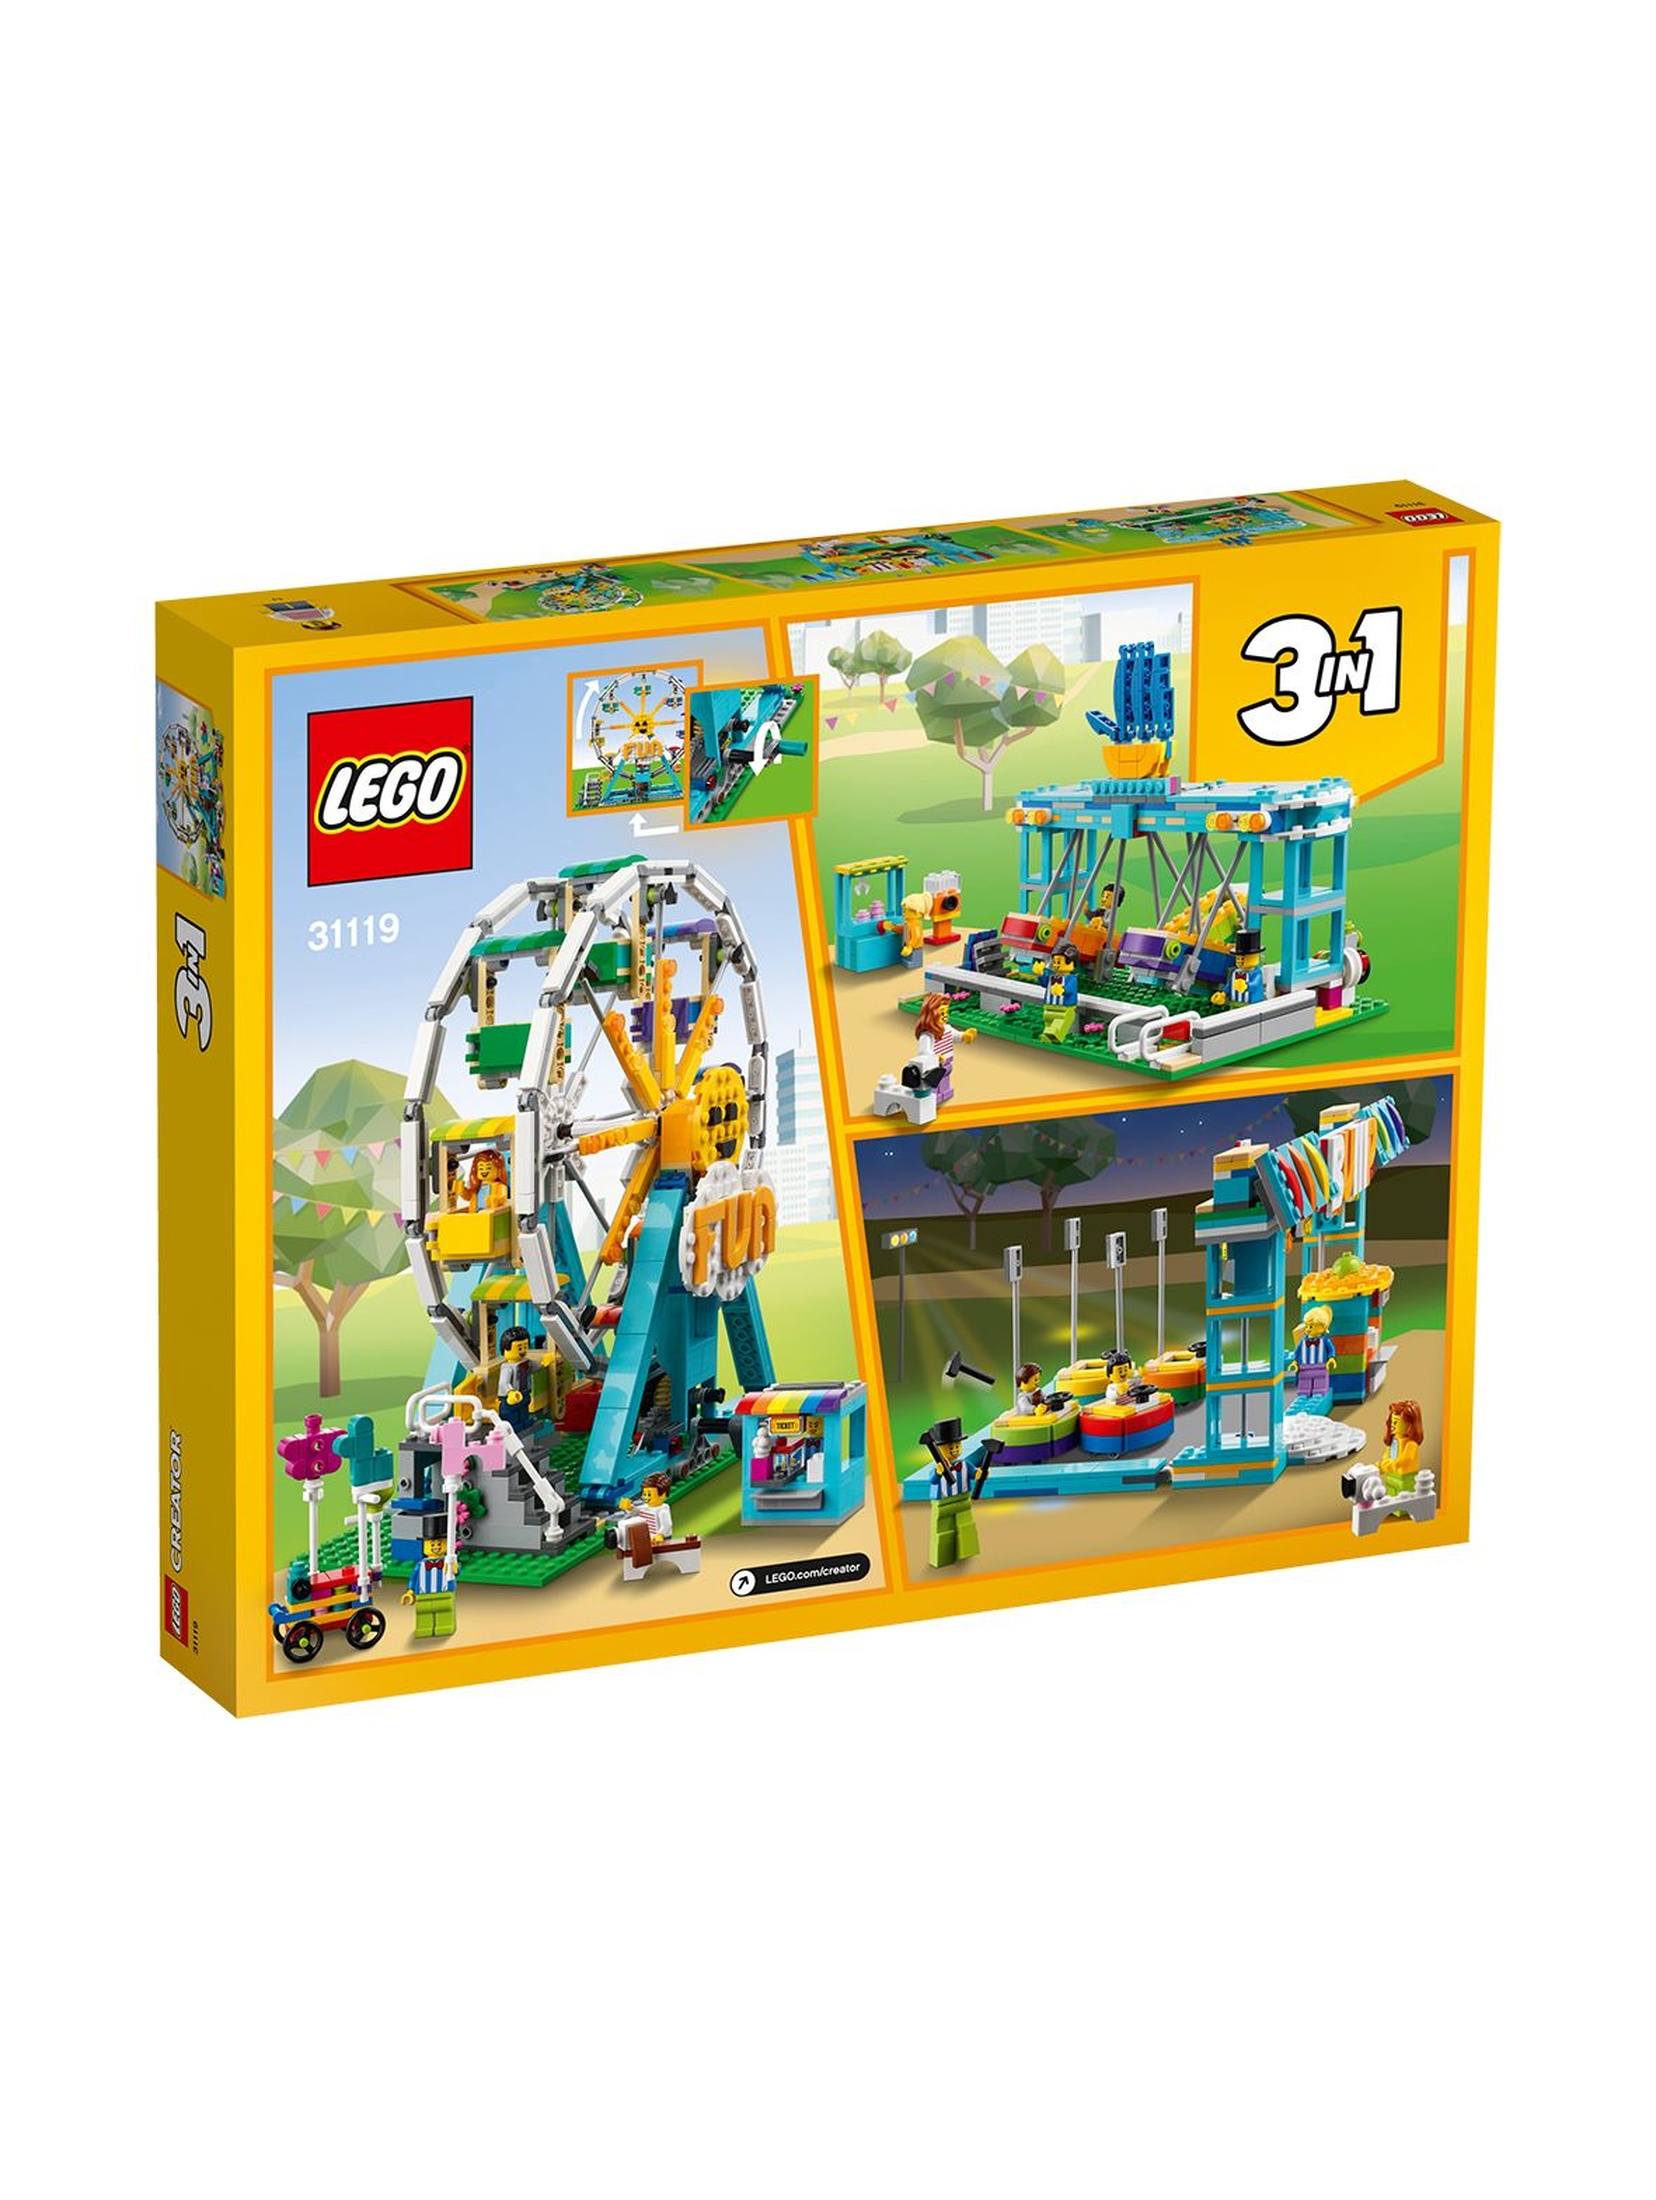 LEGO® Creator 3 w 1 Diabelski młyn 31119 - 1002 elementów, wiek 9+